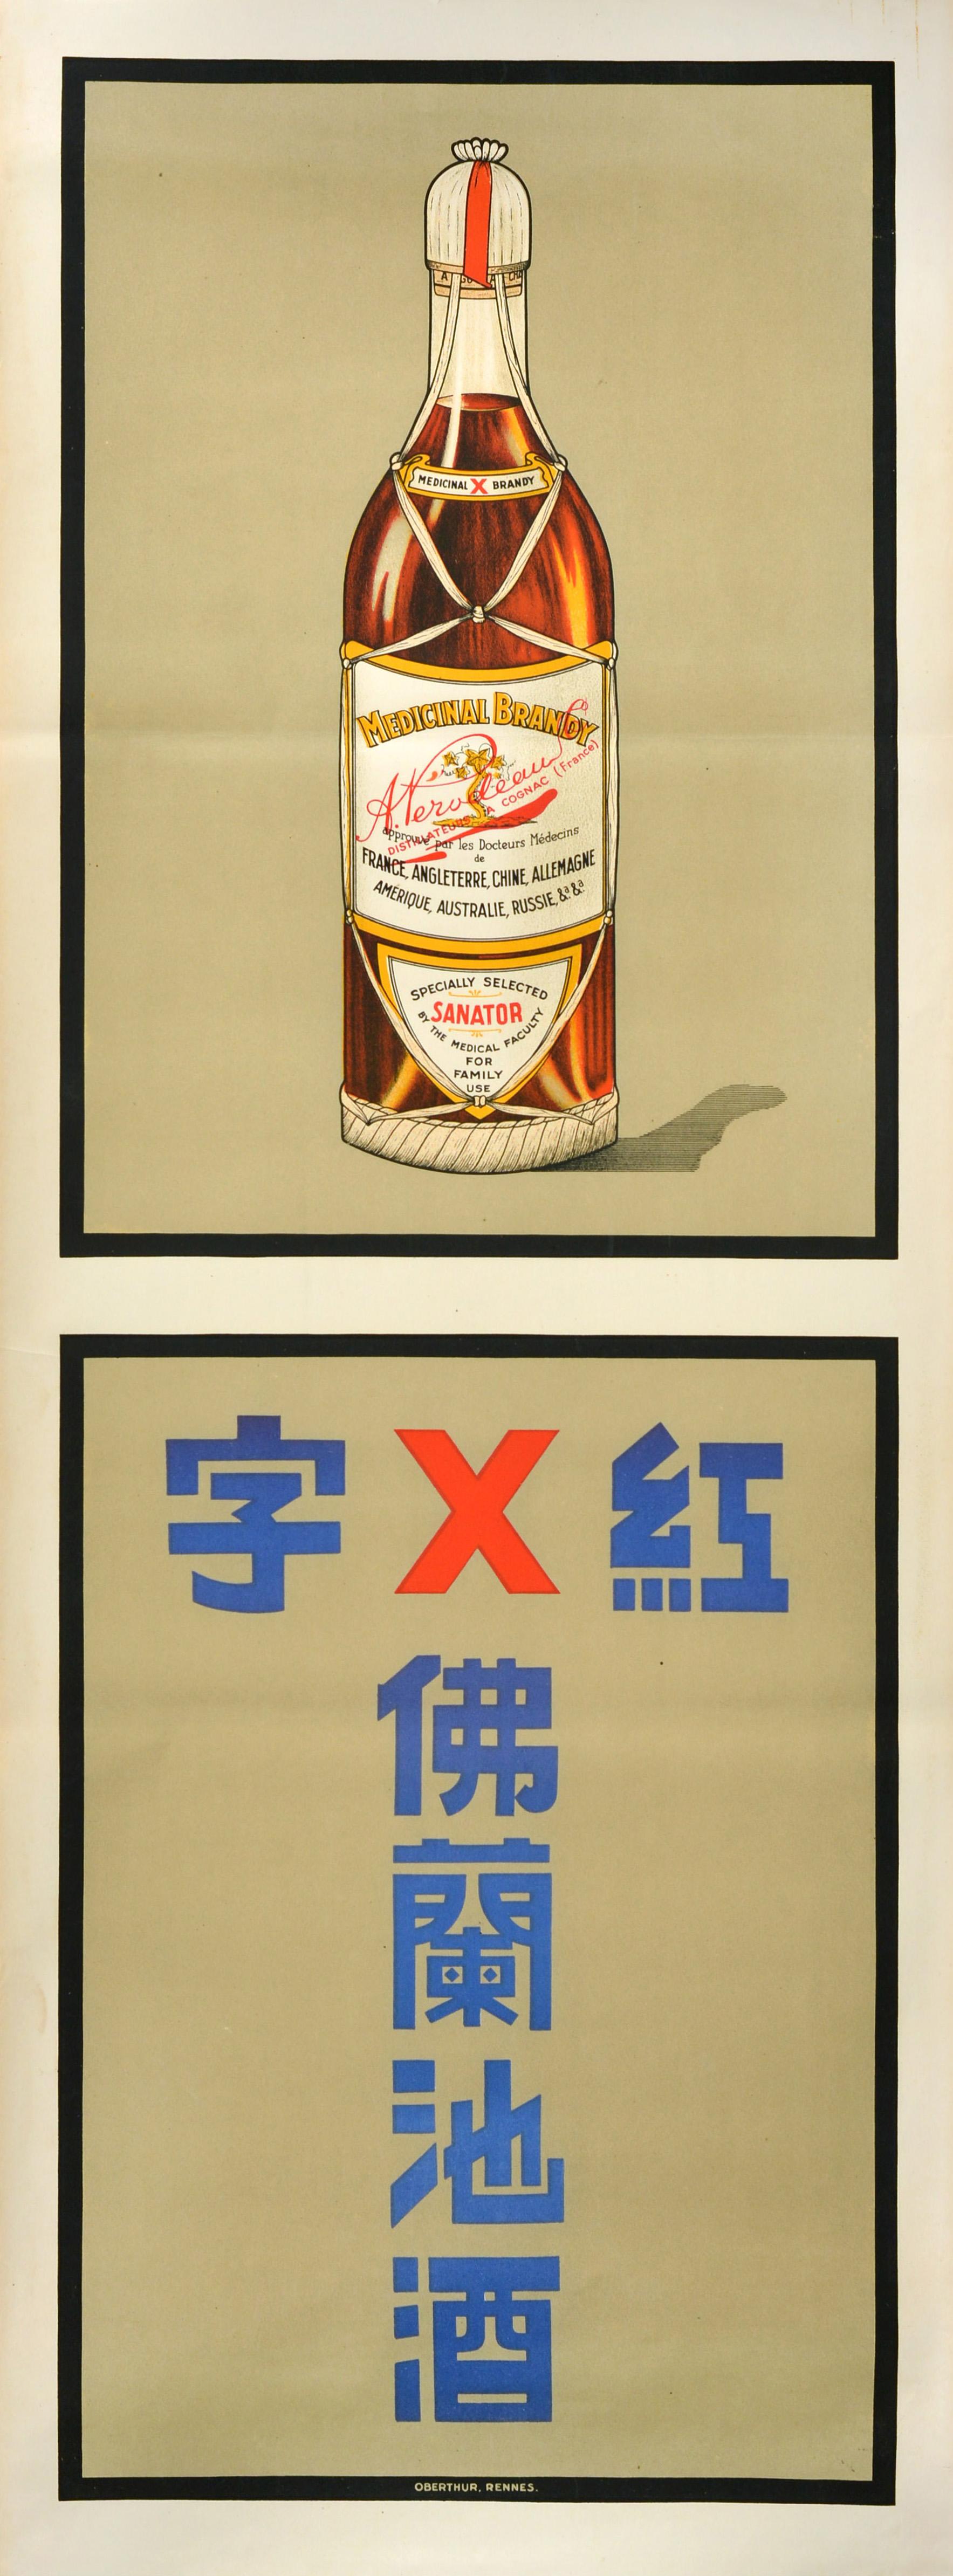 Unknown Print – Original-Vintage-Werbeplakat Medicinal Brandy Perodeau Sanator, Getränke